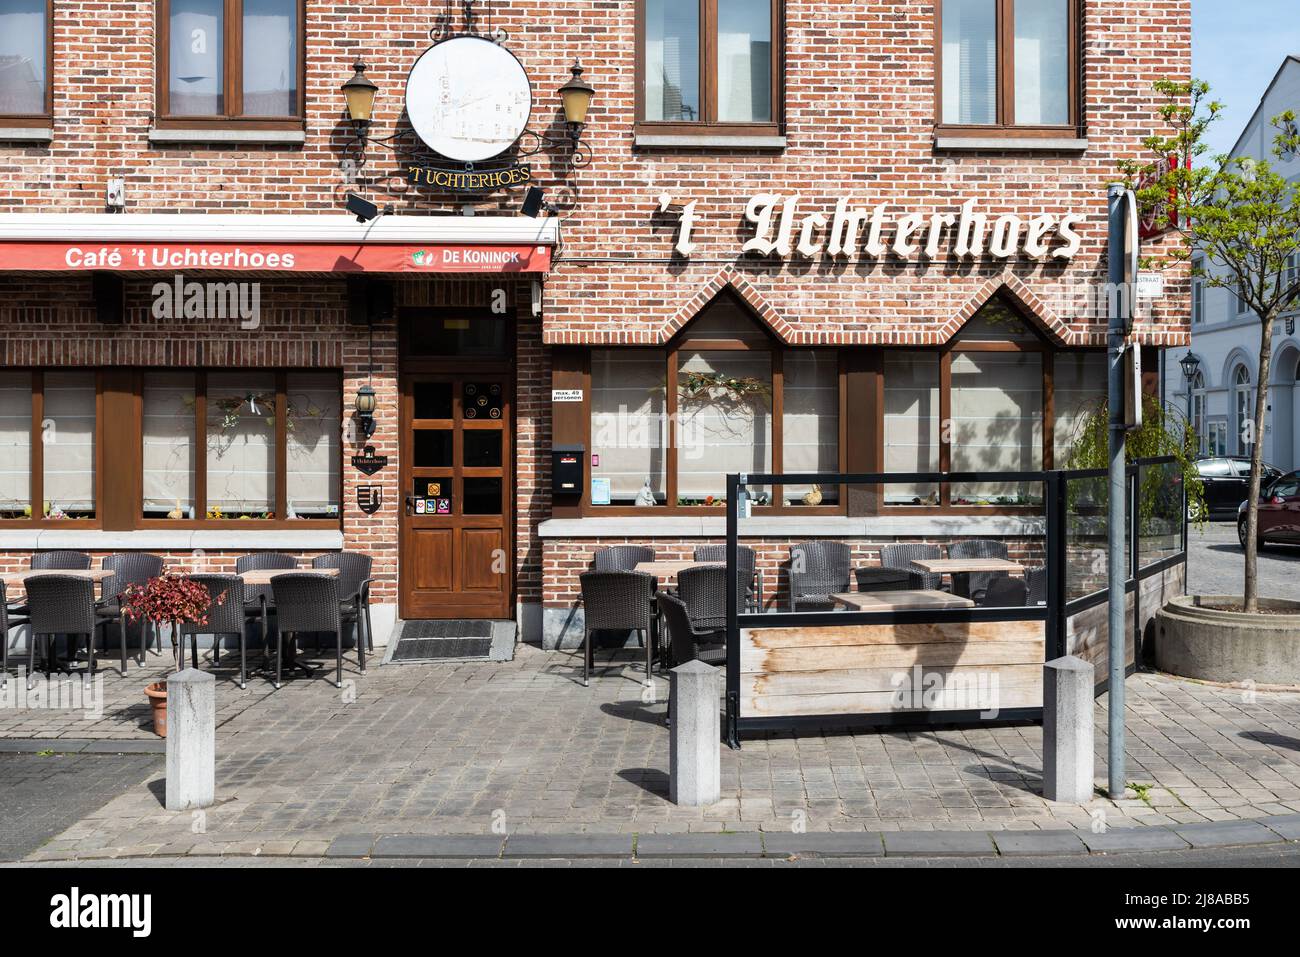 Dilsen, Limburg, Belgien - 04 14 2022 - Cafe Uchterhoes, eine lokale Kneipe mit Backsteinfassade Stockfoto